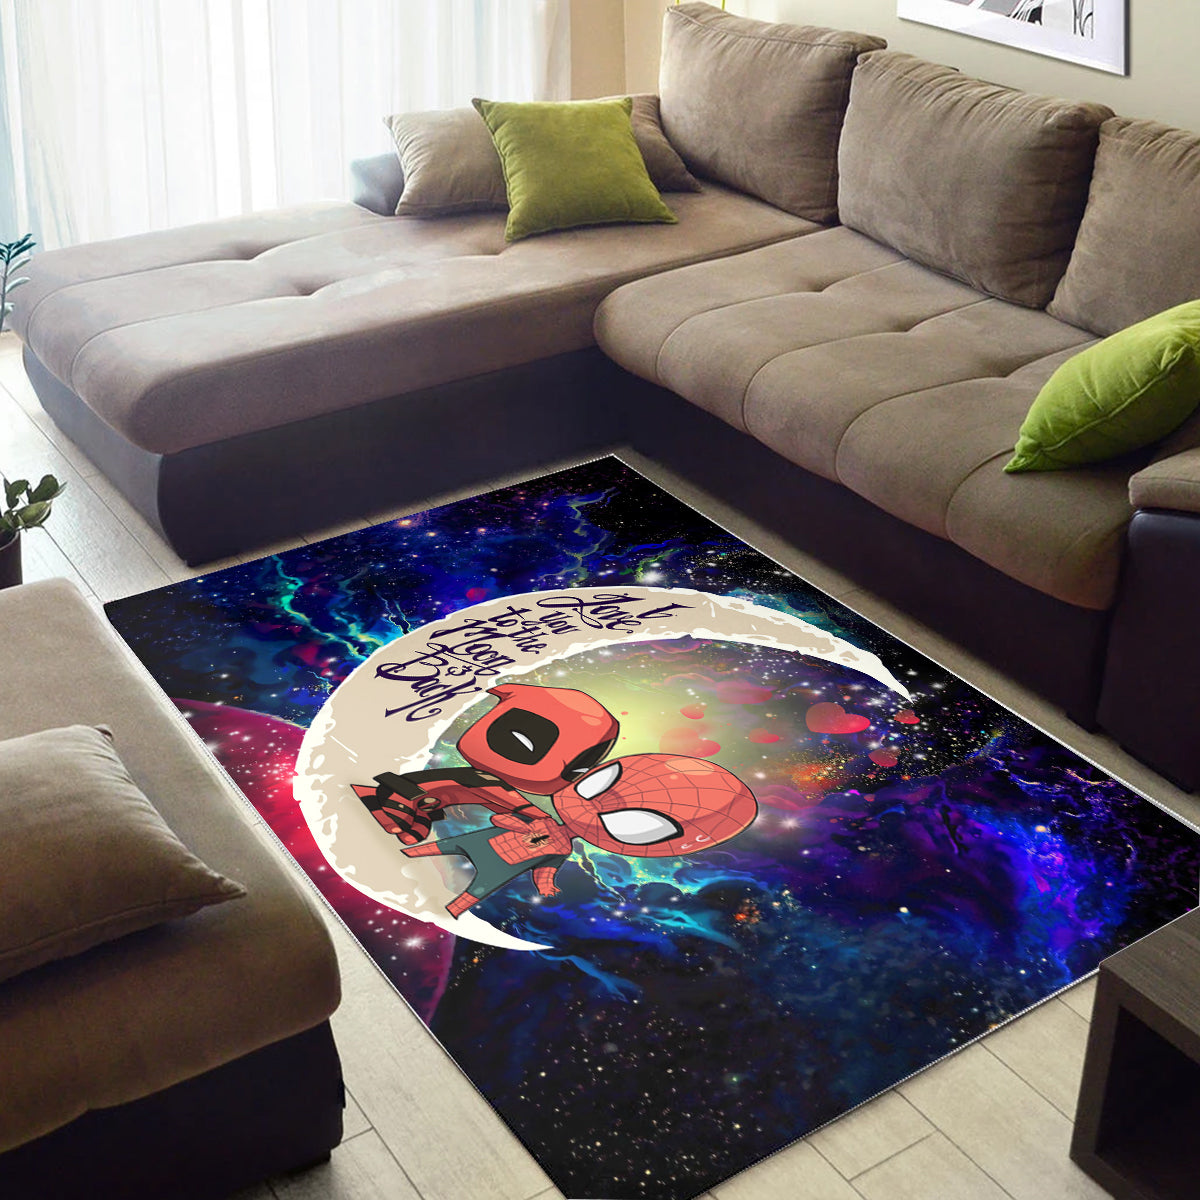 Snoopy Dog Sleep Love You To The Moon Galaxy Carpet Rug Home Room Decor